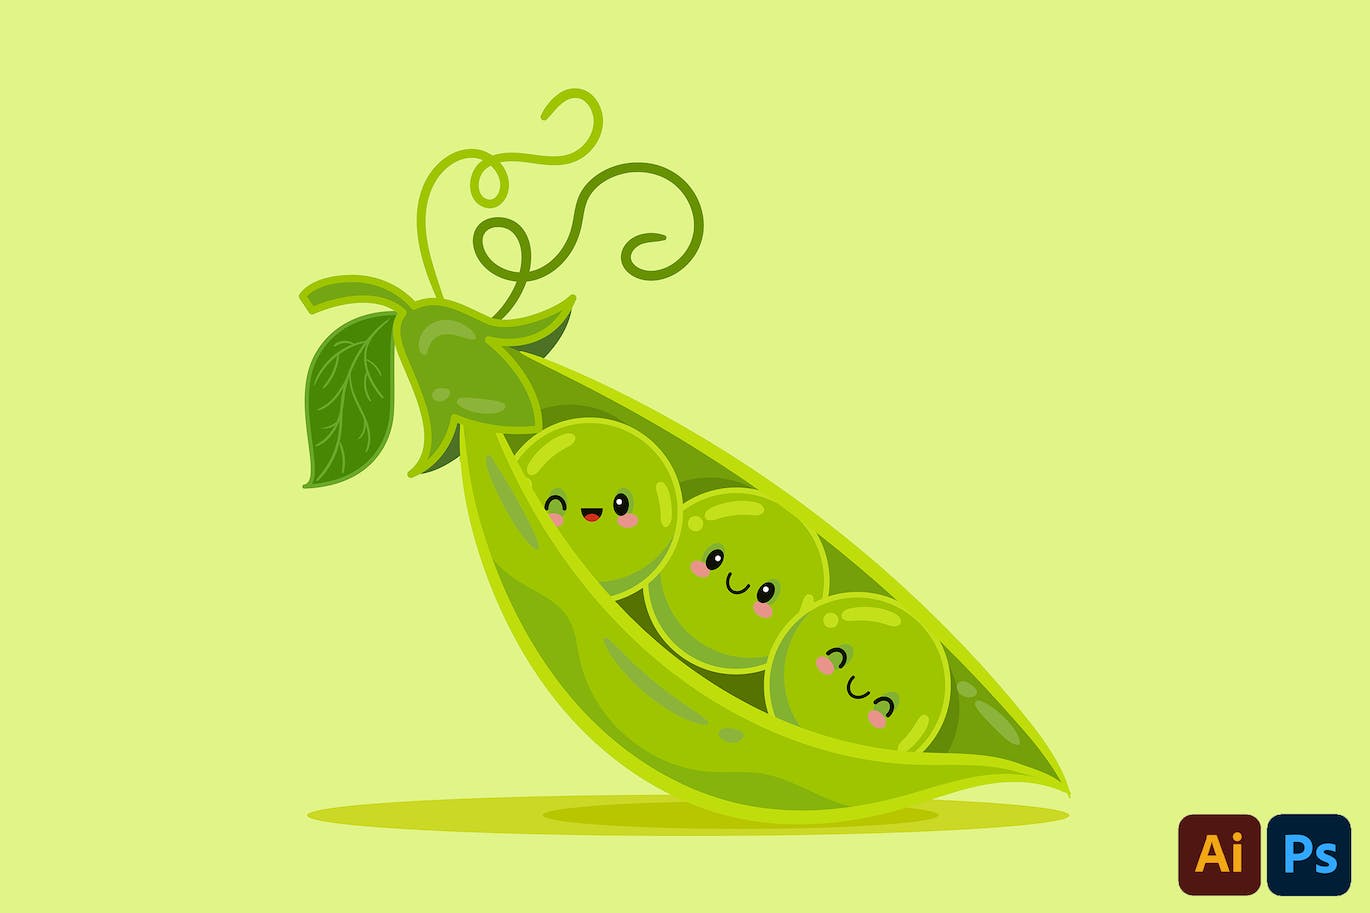 豌豆荚卡通插画 Peas in a Pod Cartoon Illustration-1